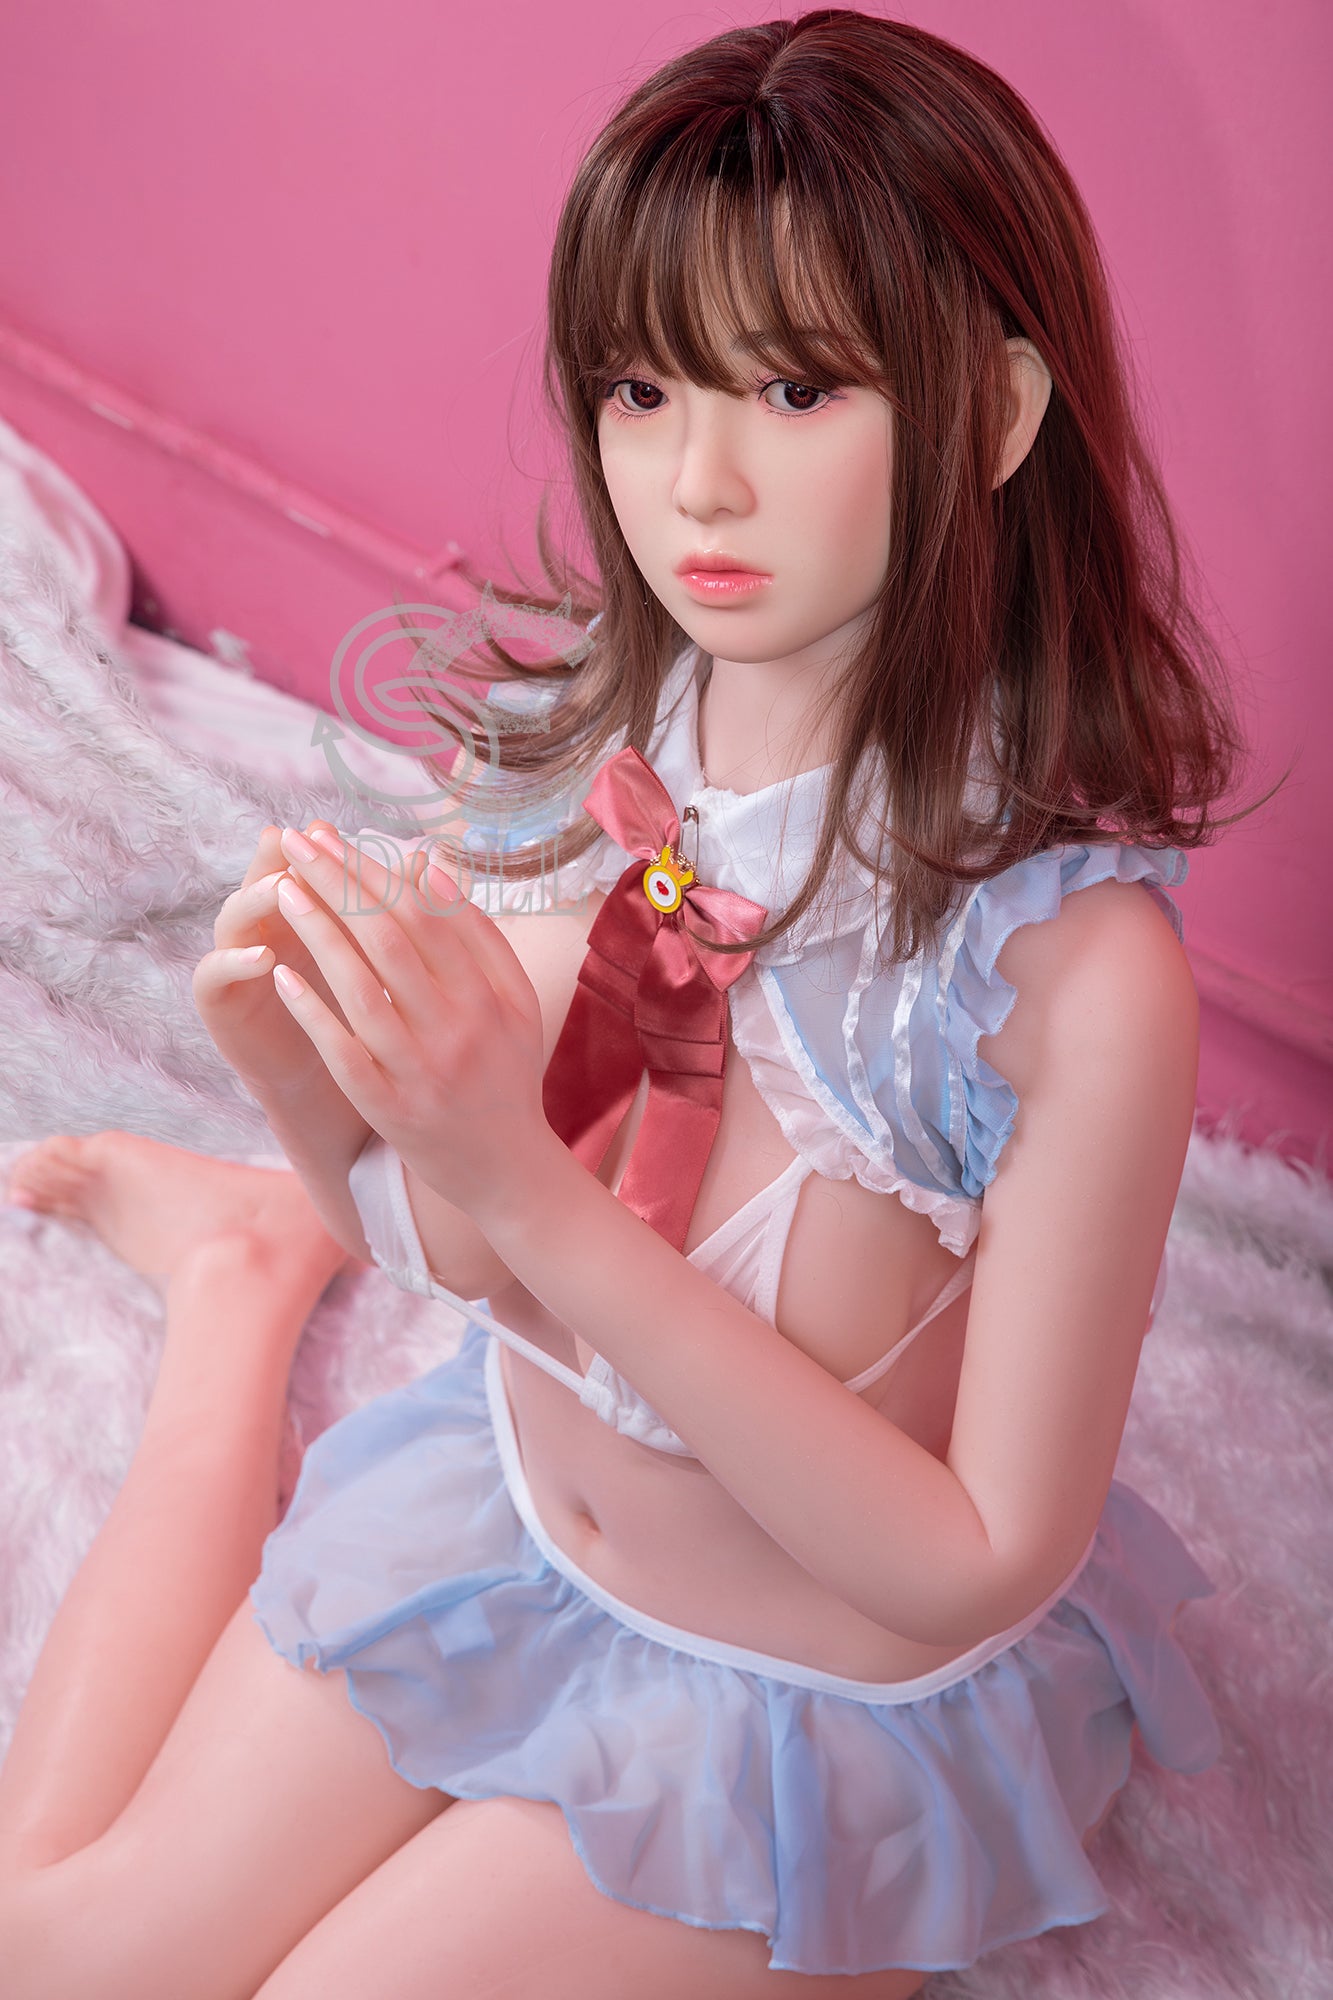 SEDOLL 160 cm C Silicone - Suzumi | Buy Sex Dolls at DOLLS ACTUALLY